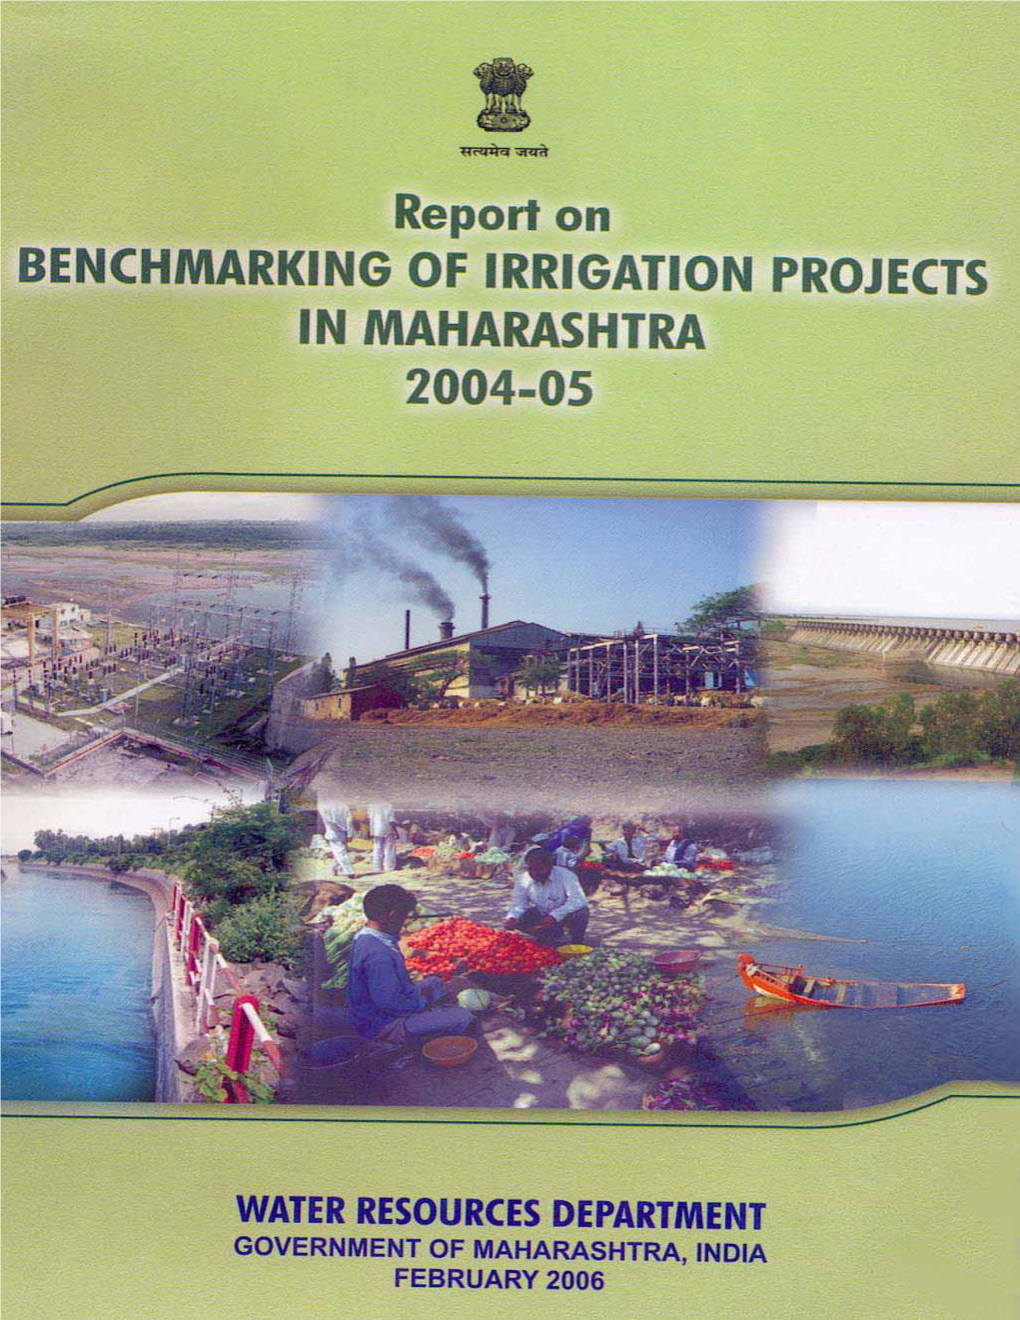 Benchmarking of Irrigation Projects 2004-05 (Maharashtra State)